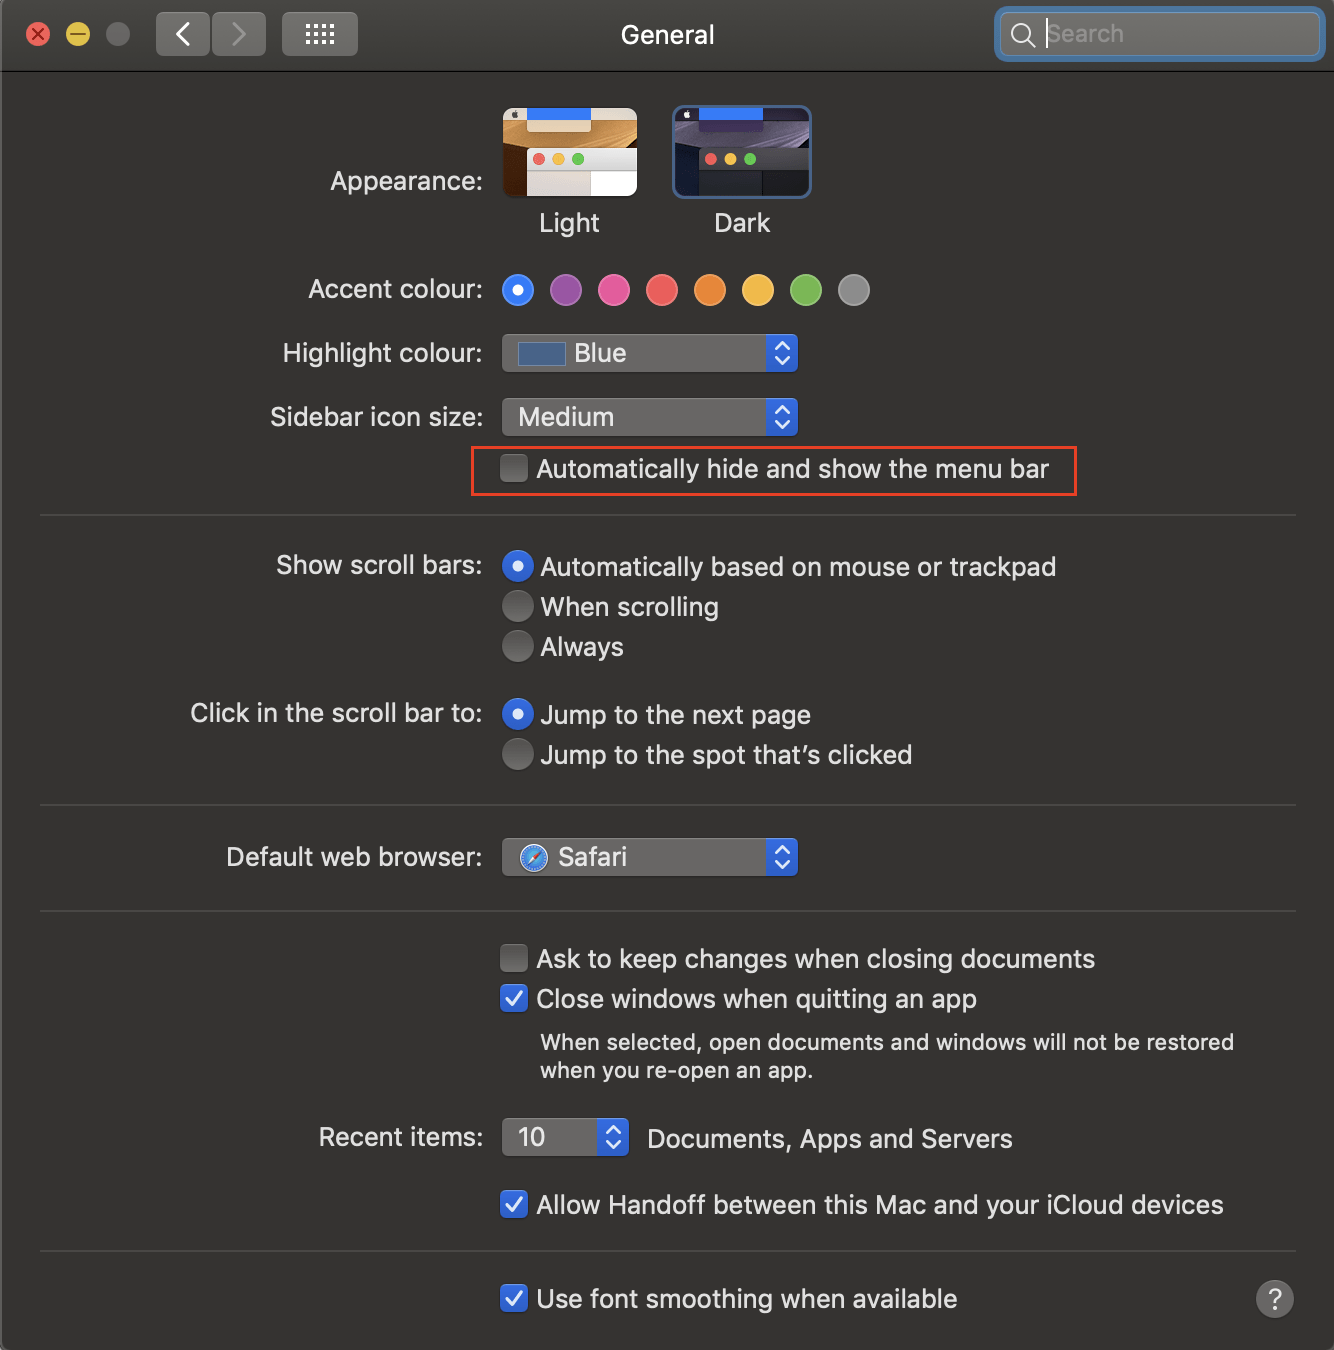 General settings screen on macOS Mojave.